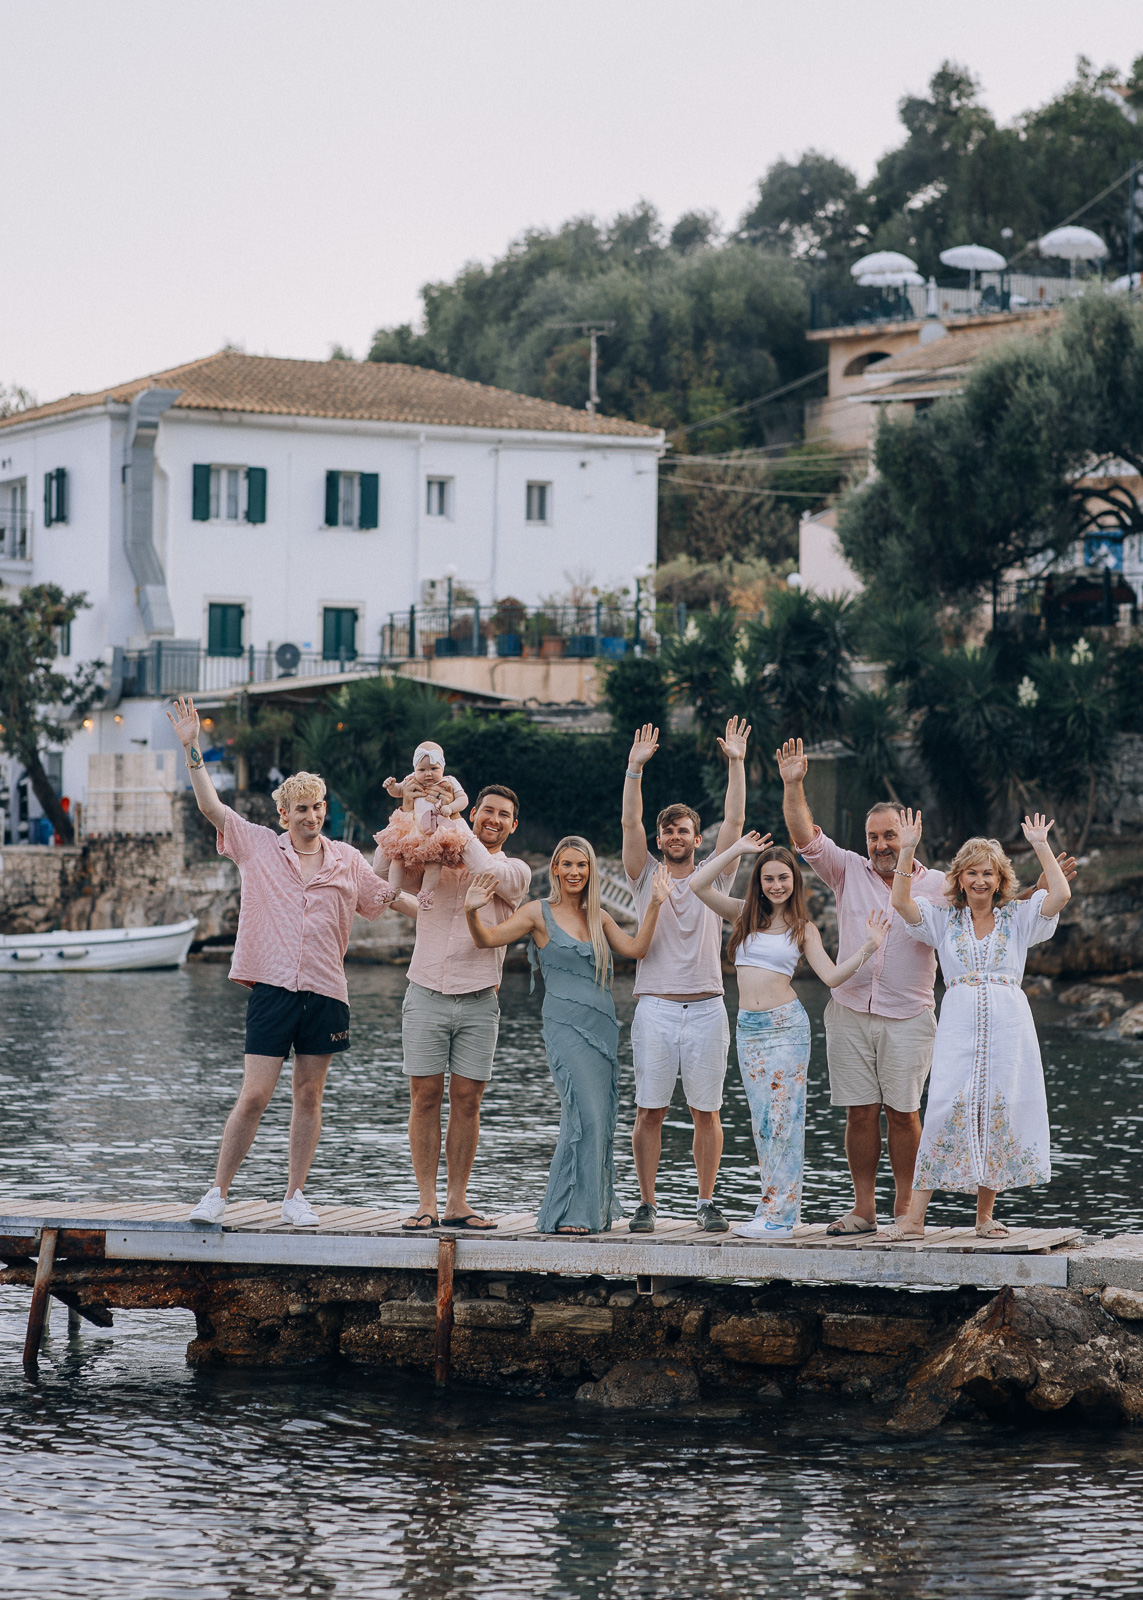 Family photoshoot price in Corfu greece